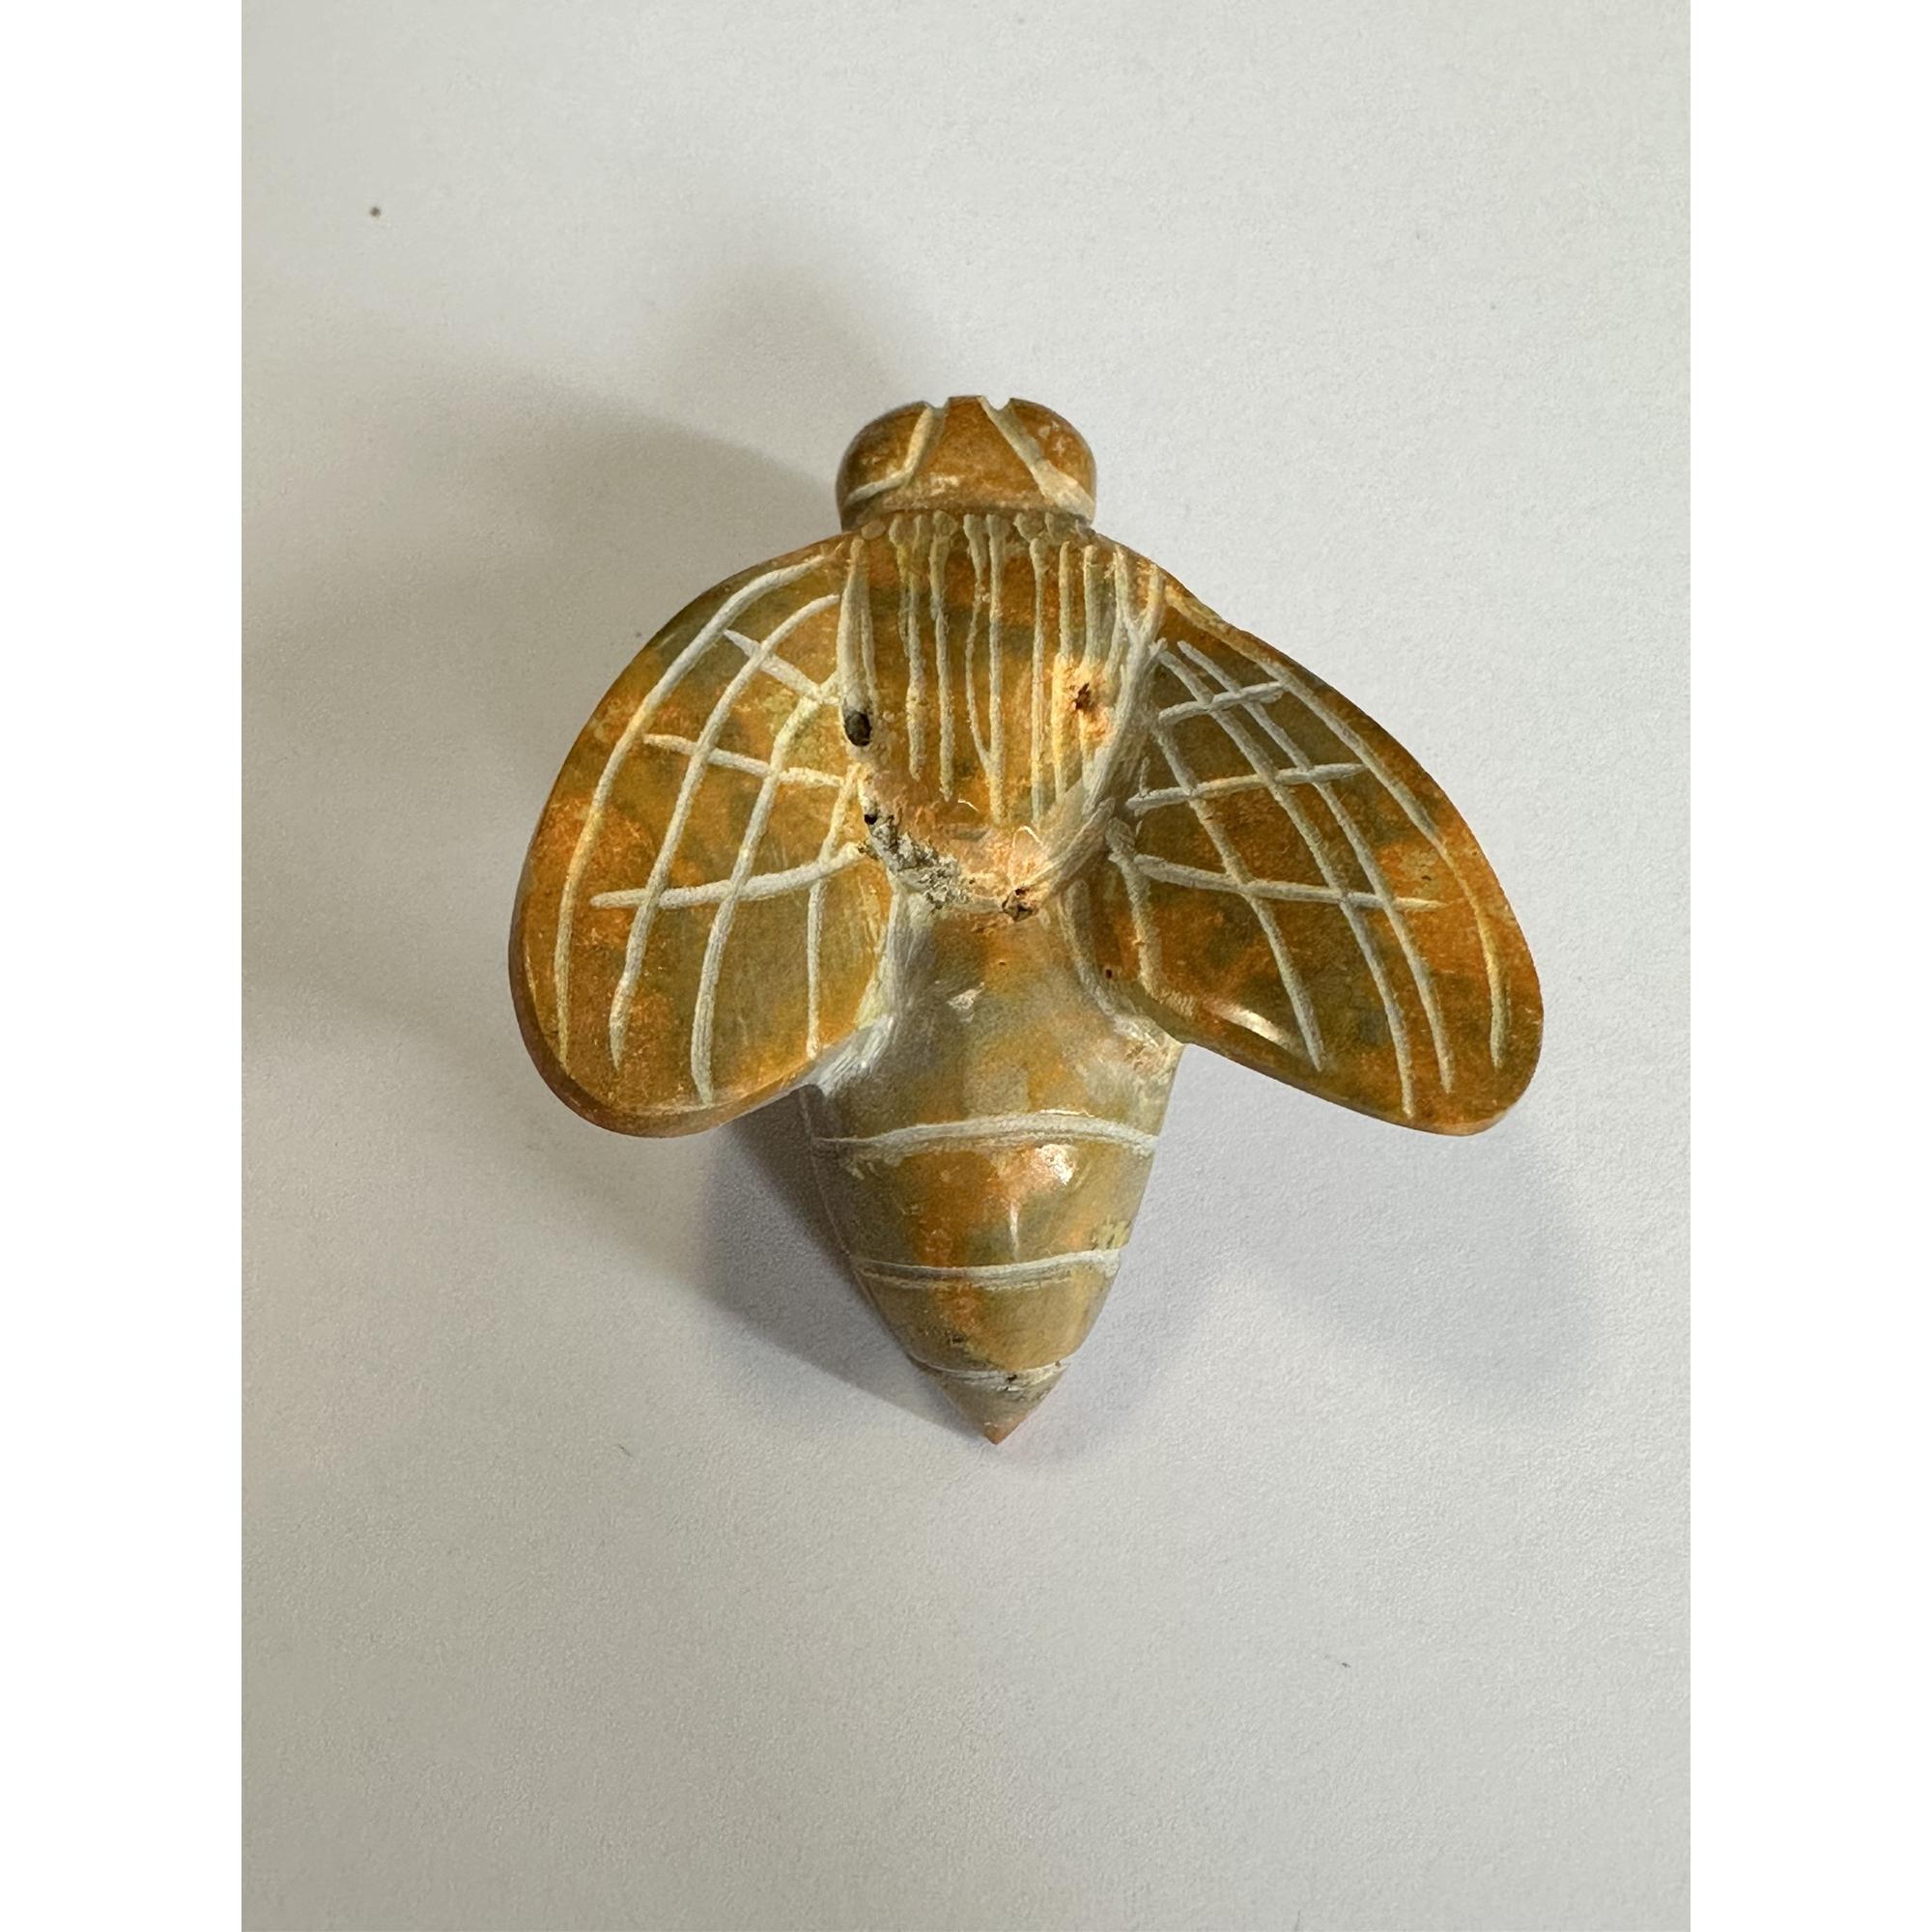 Bumblebee Jasper carved Bee, beautifully detailed Prehistoric Online